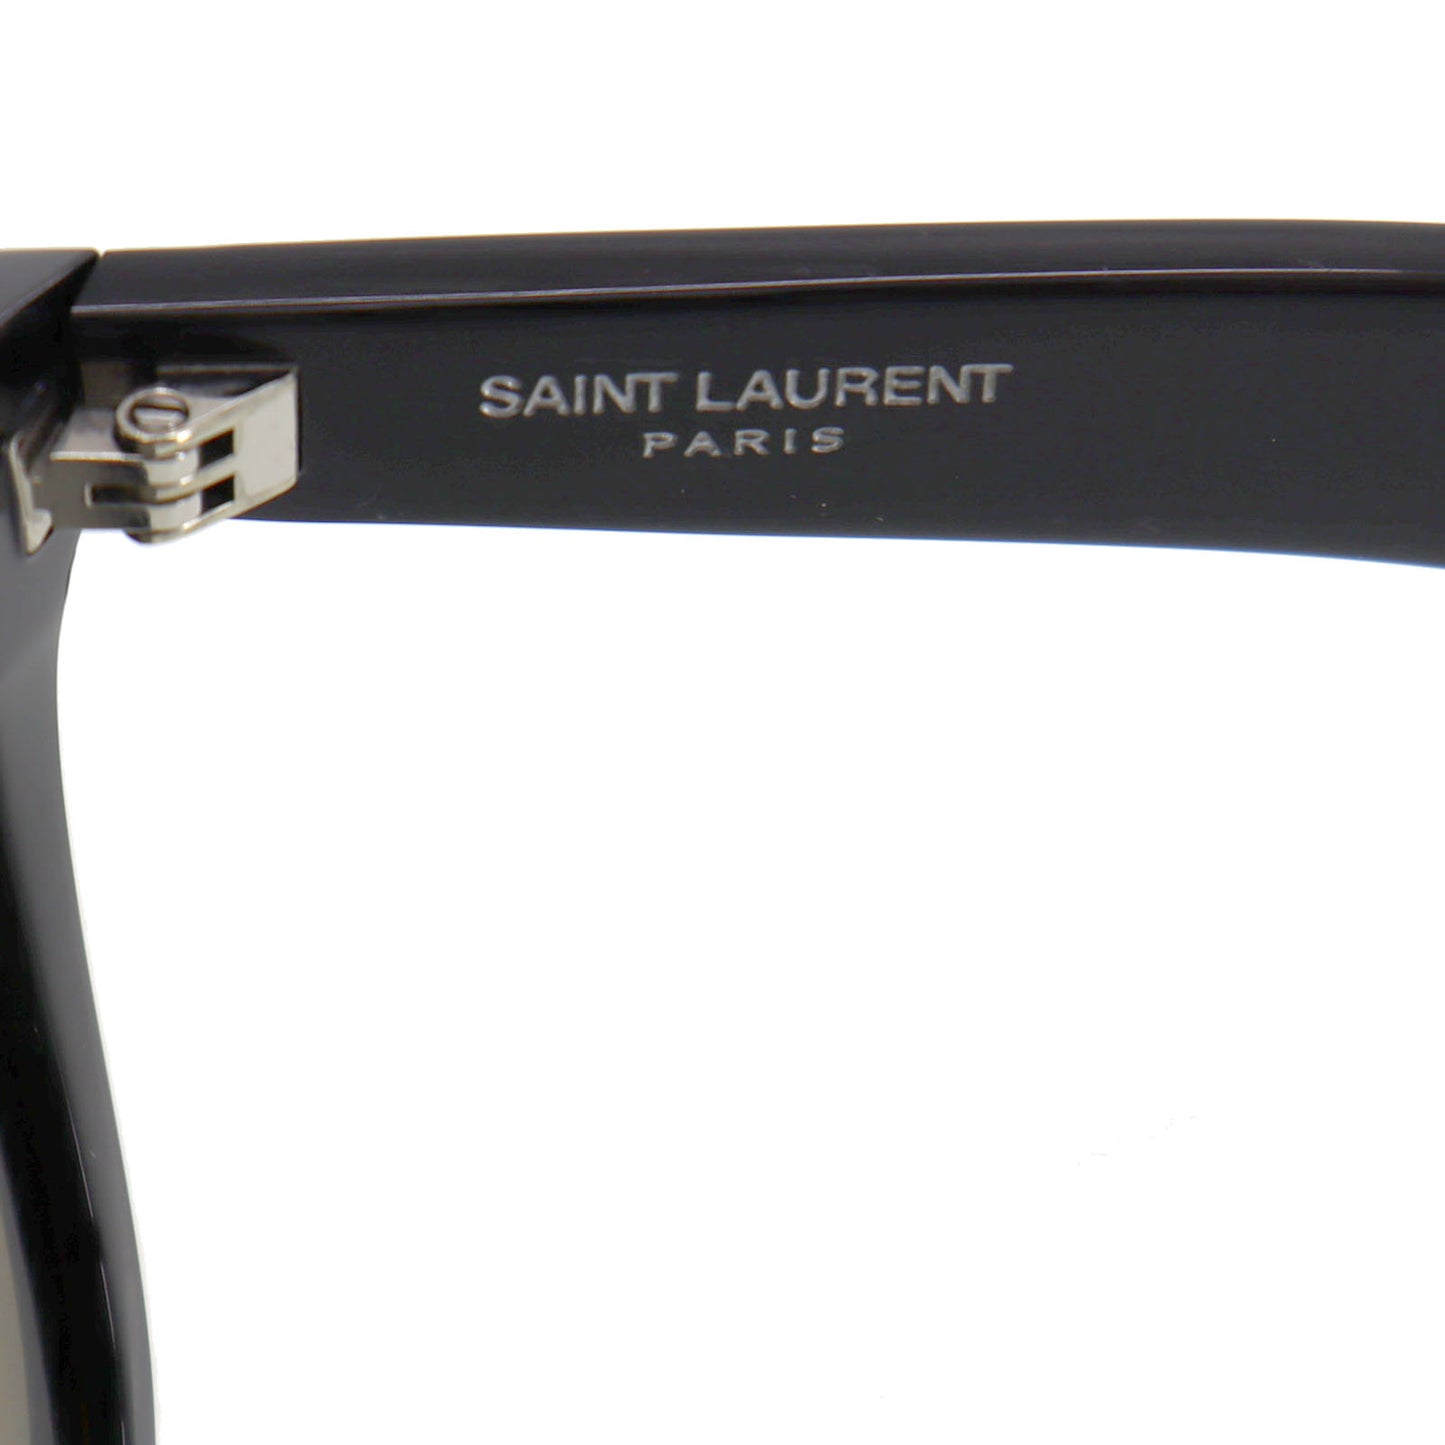 Yves Saint Laurent Sunglasses Mirror Black Yellow #AG167